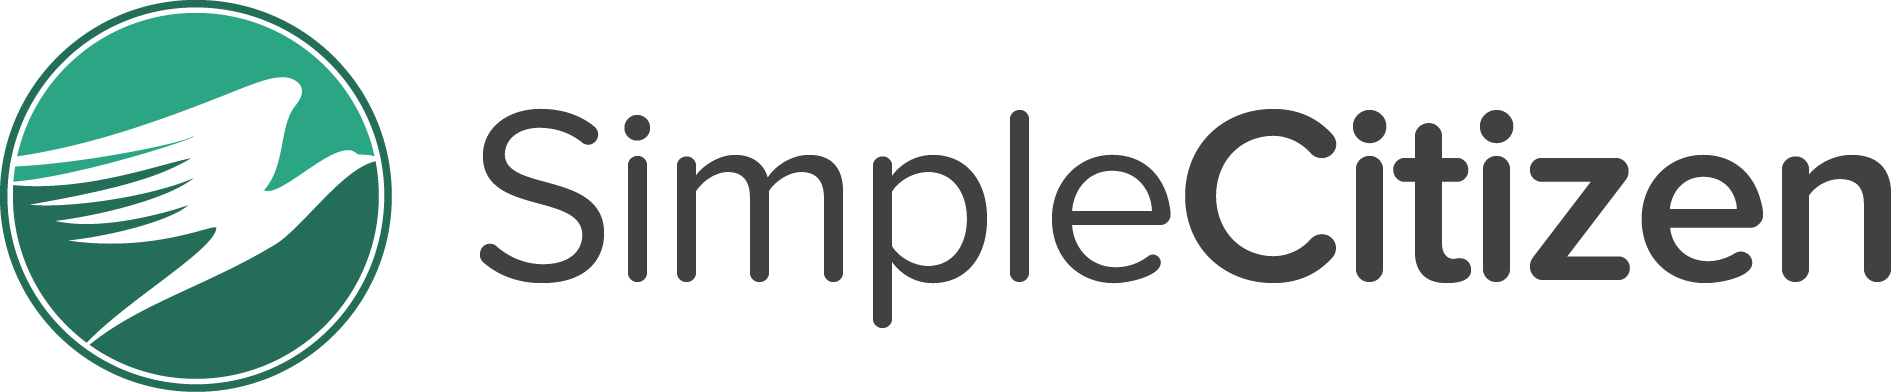 SimpleCitizen Logo_horizontal.png